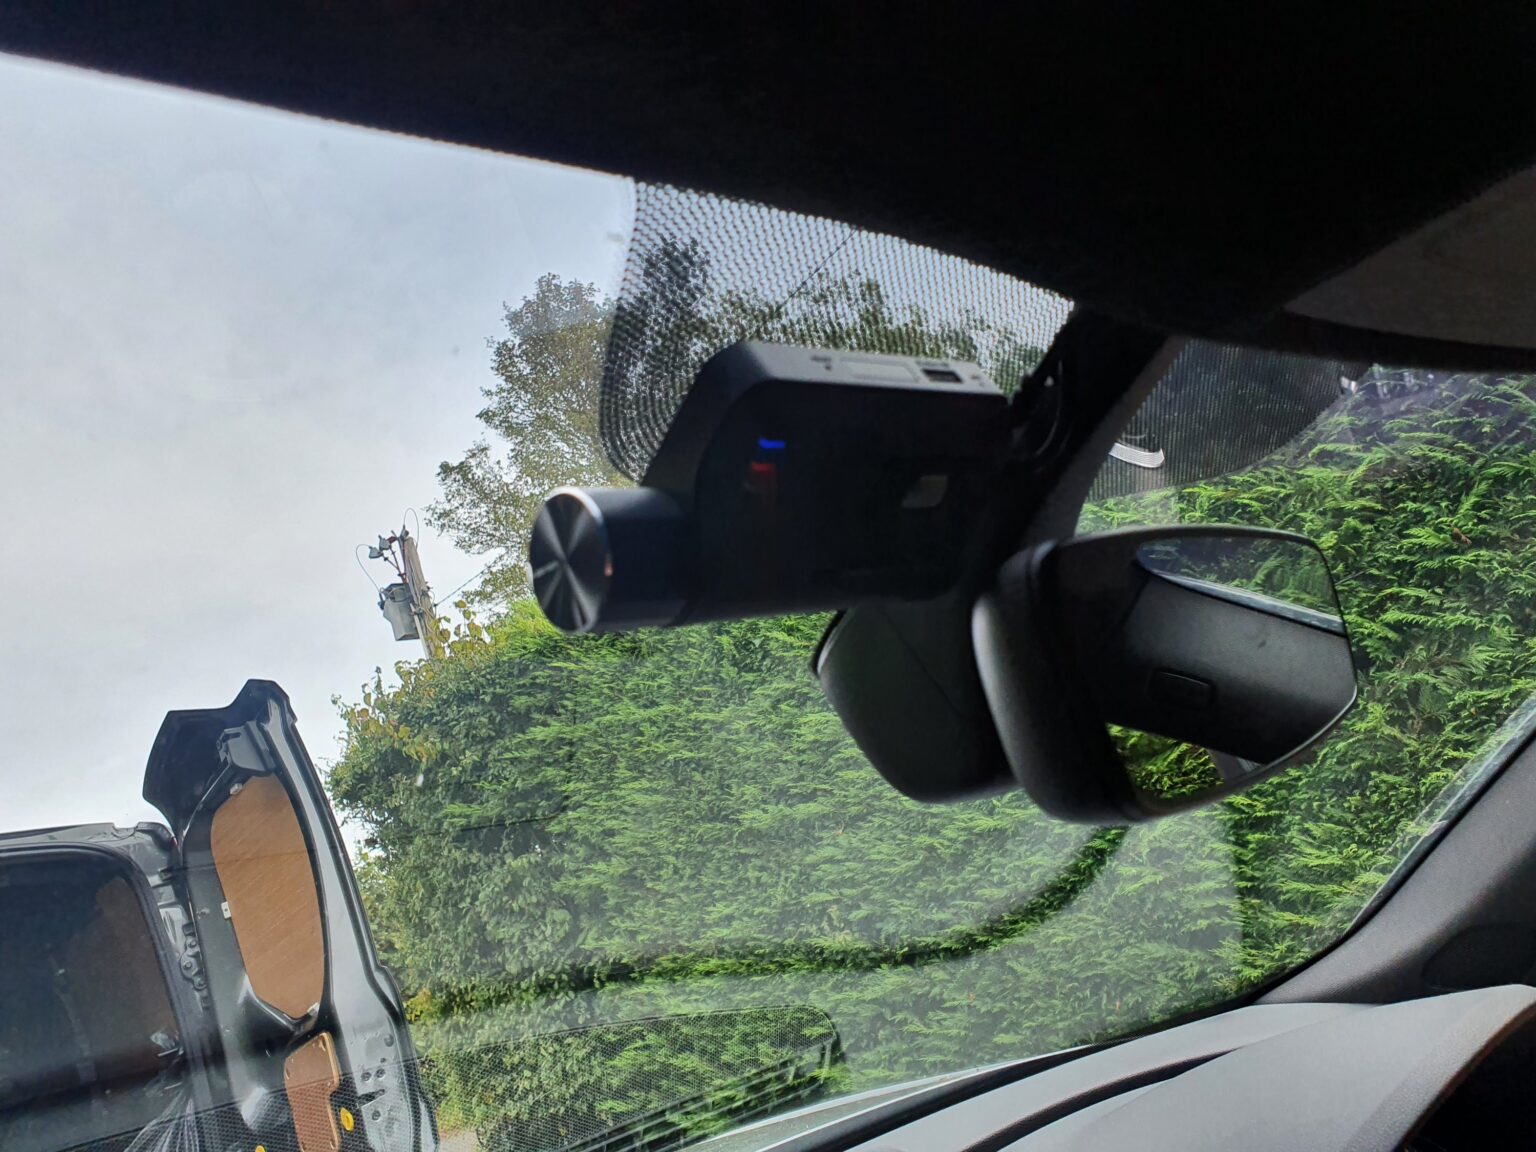 Audi S3 Q800 front and rear dash camera – Auto Mobile Installations